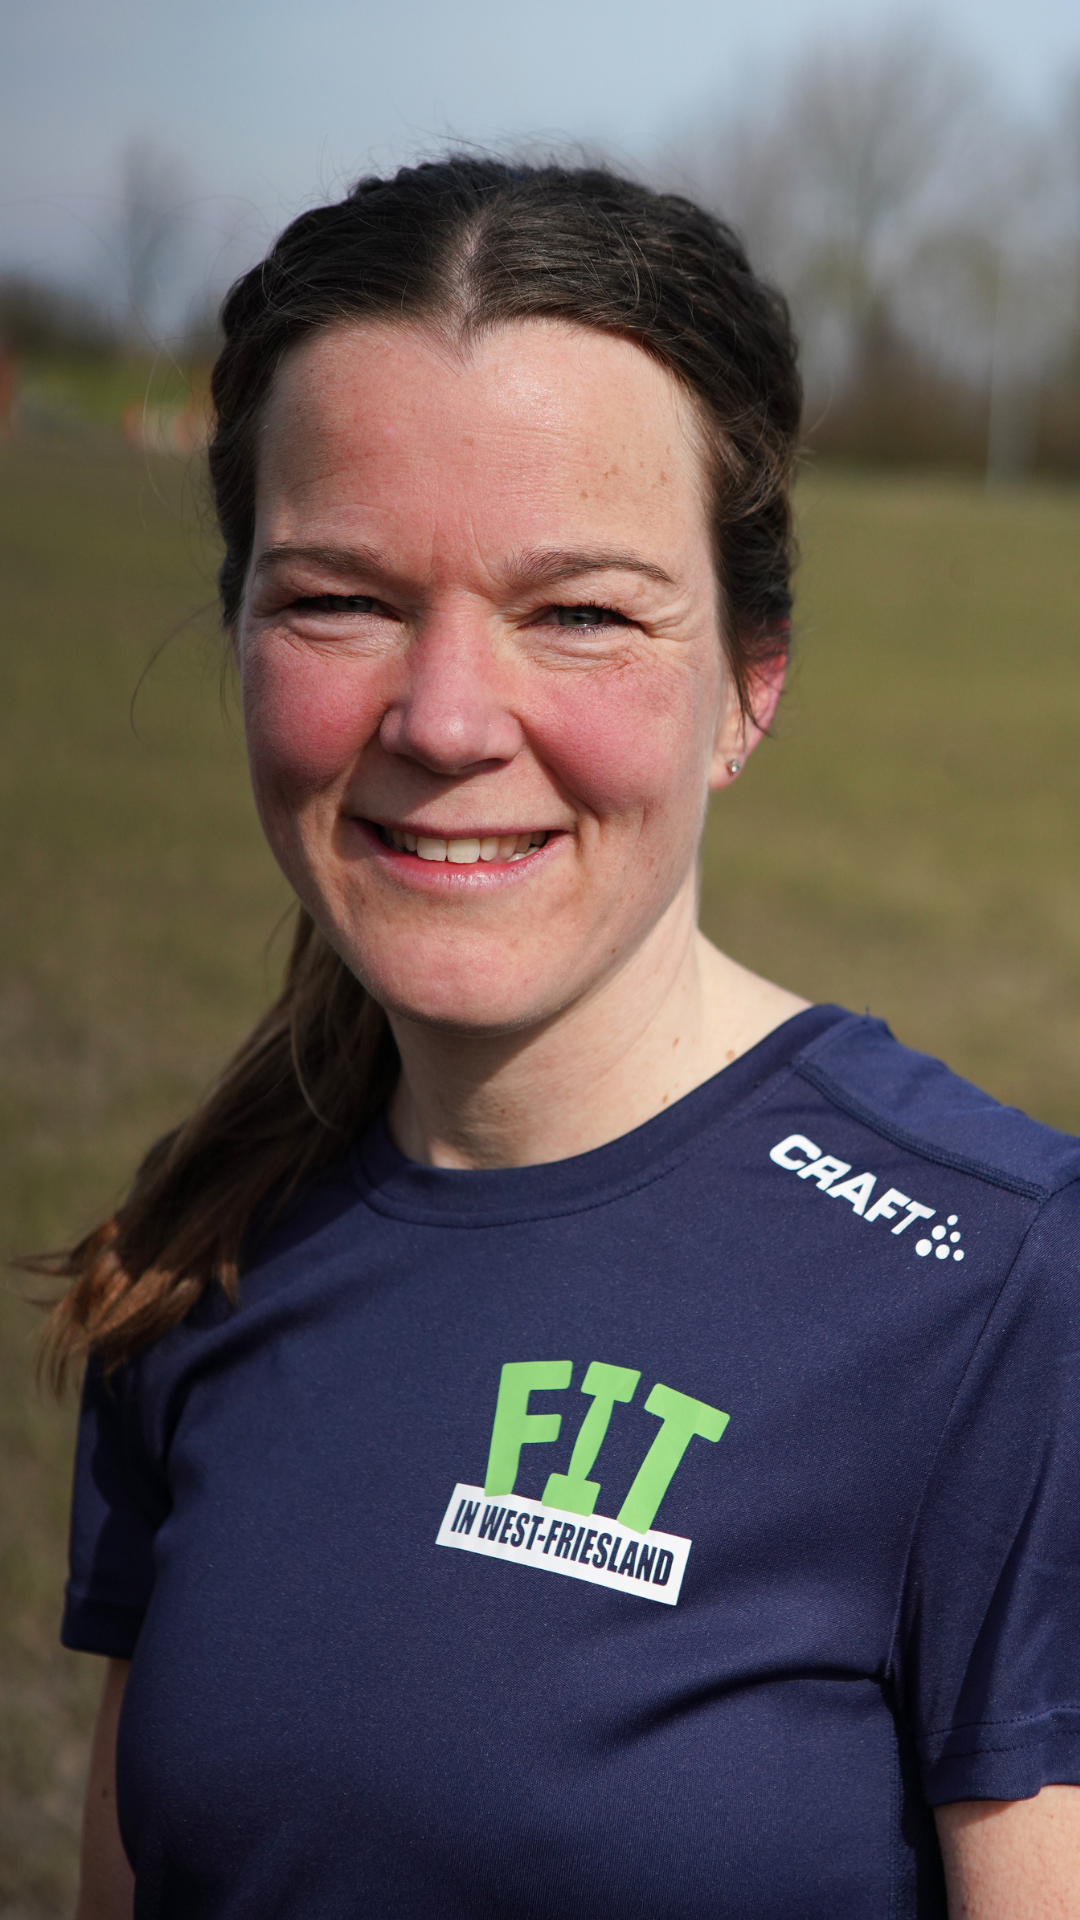 FIT in West-Friesland Wendy Laan hardlopen trainer